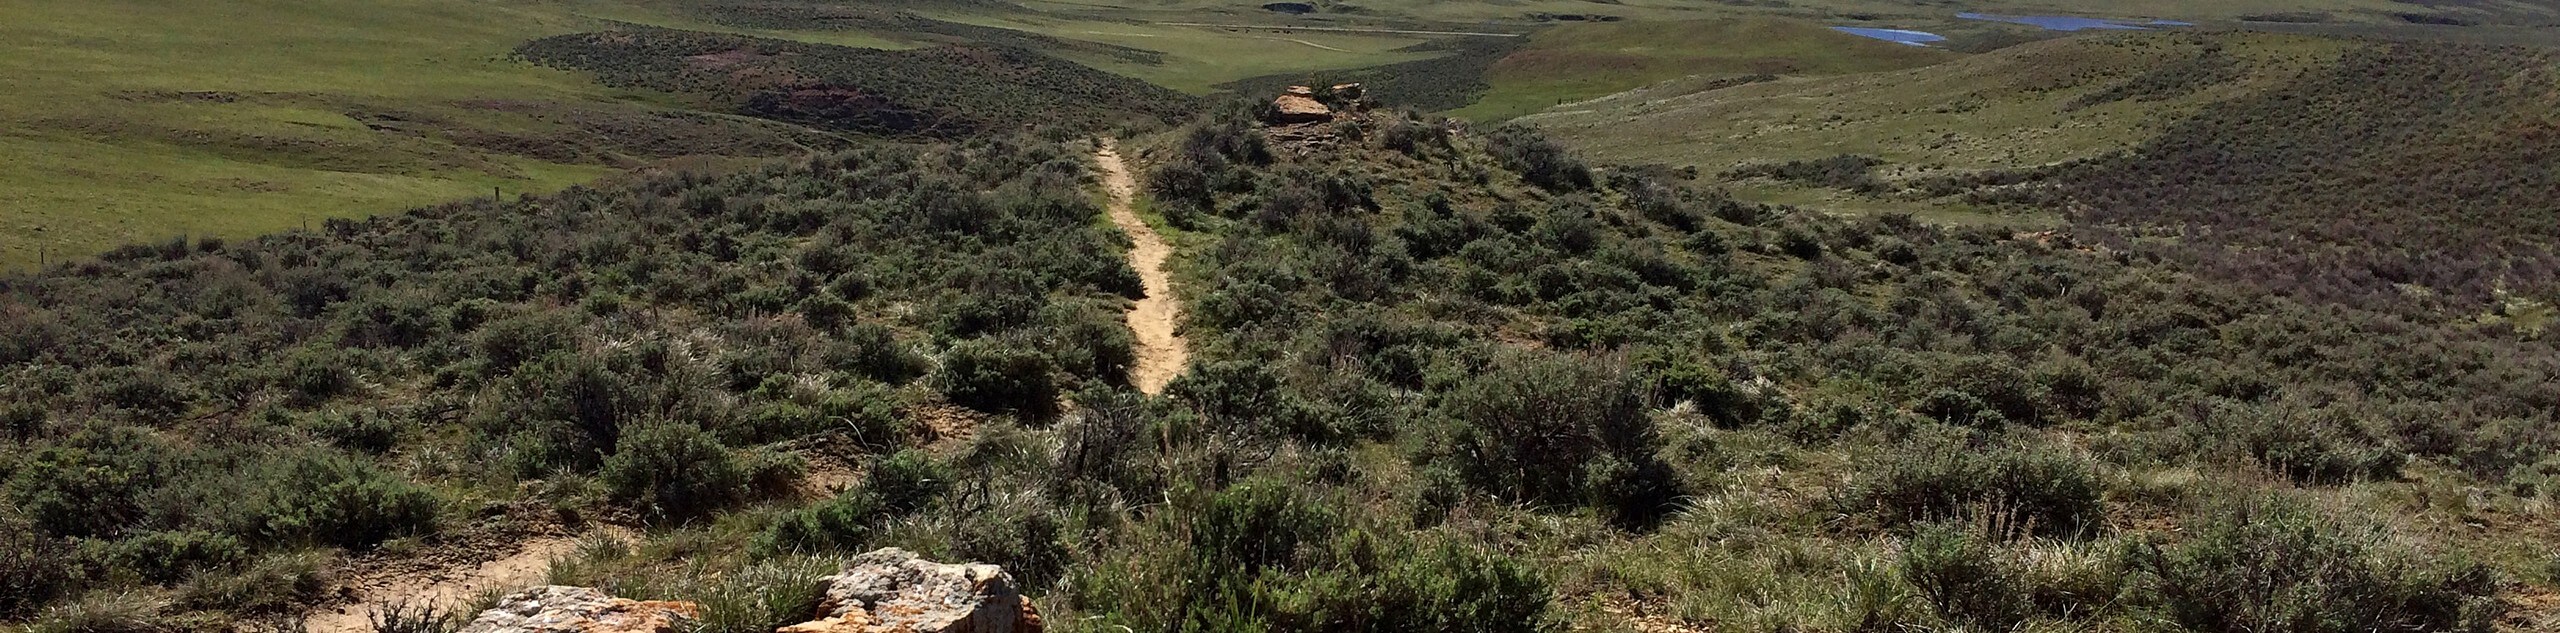 Petrified Tree Trail